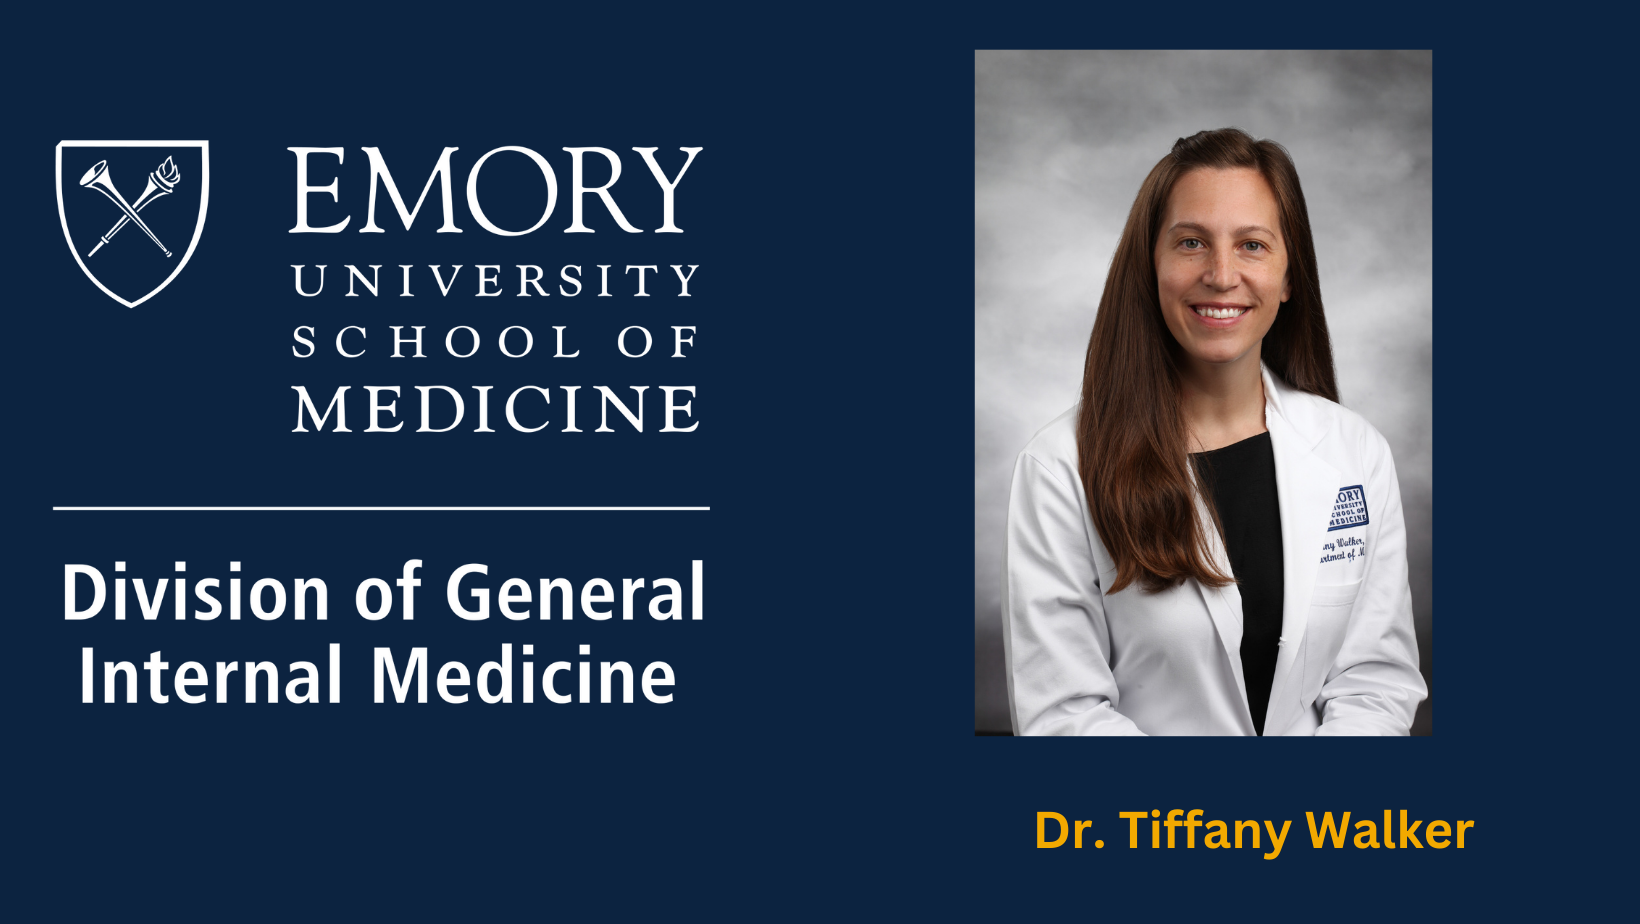 Dr. Tiffany Walker and the Emory Division of General Internal Medicine logo